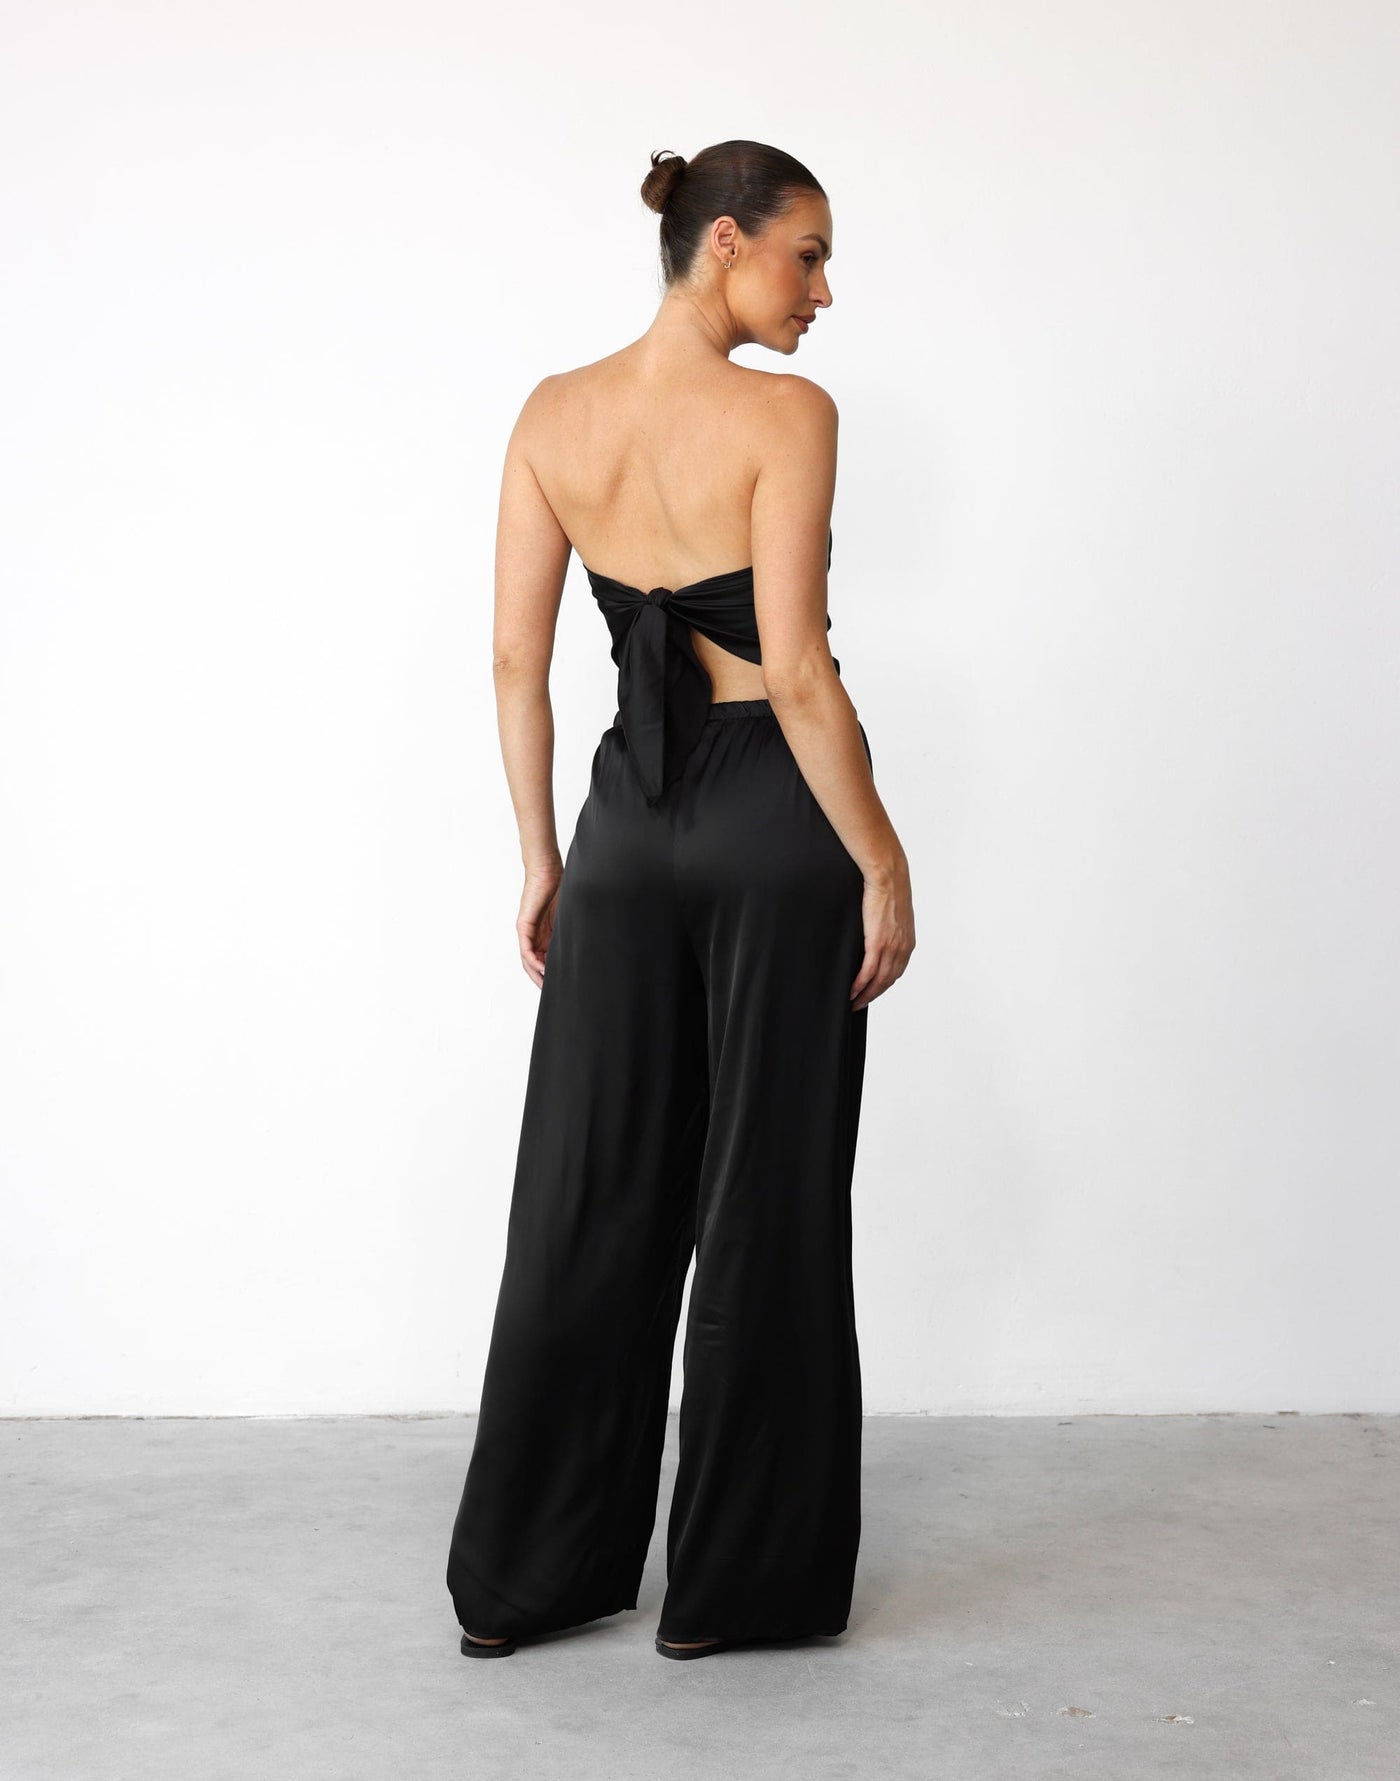 Jahmilla Scarf Top (Black) - Satin Adjustable Tie Scarf Top - Women's Top - Charcoal Clothing